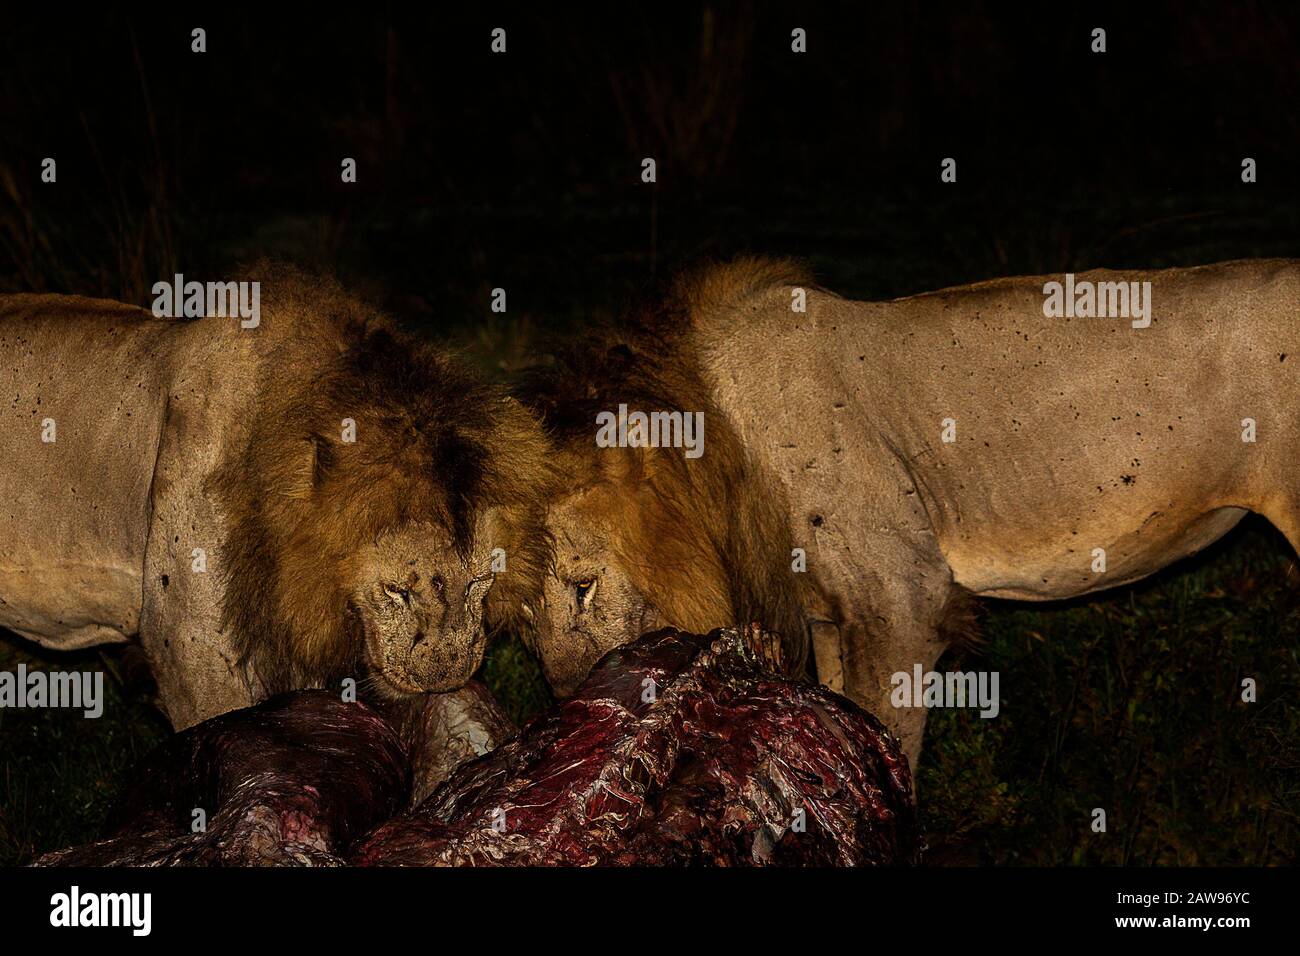 Lions eating the kill at night in Masai Mara, Kenya, Africa Stock Photo